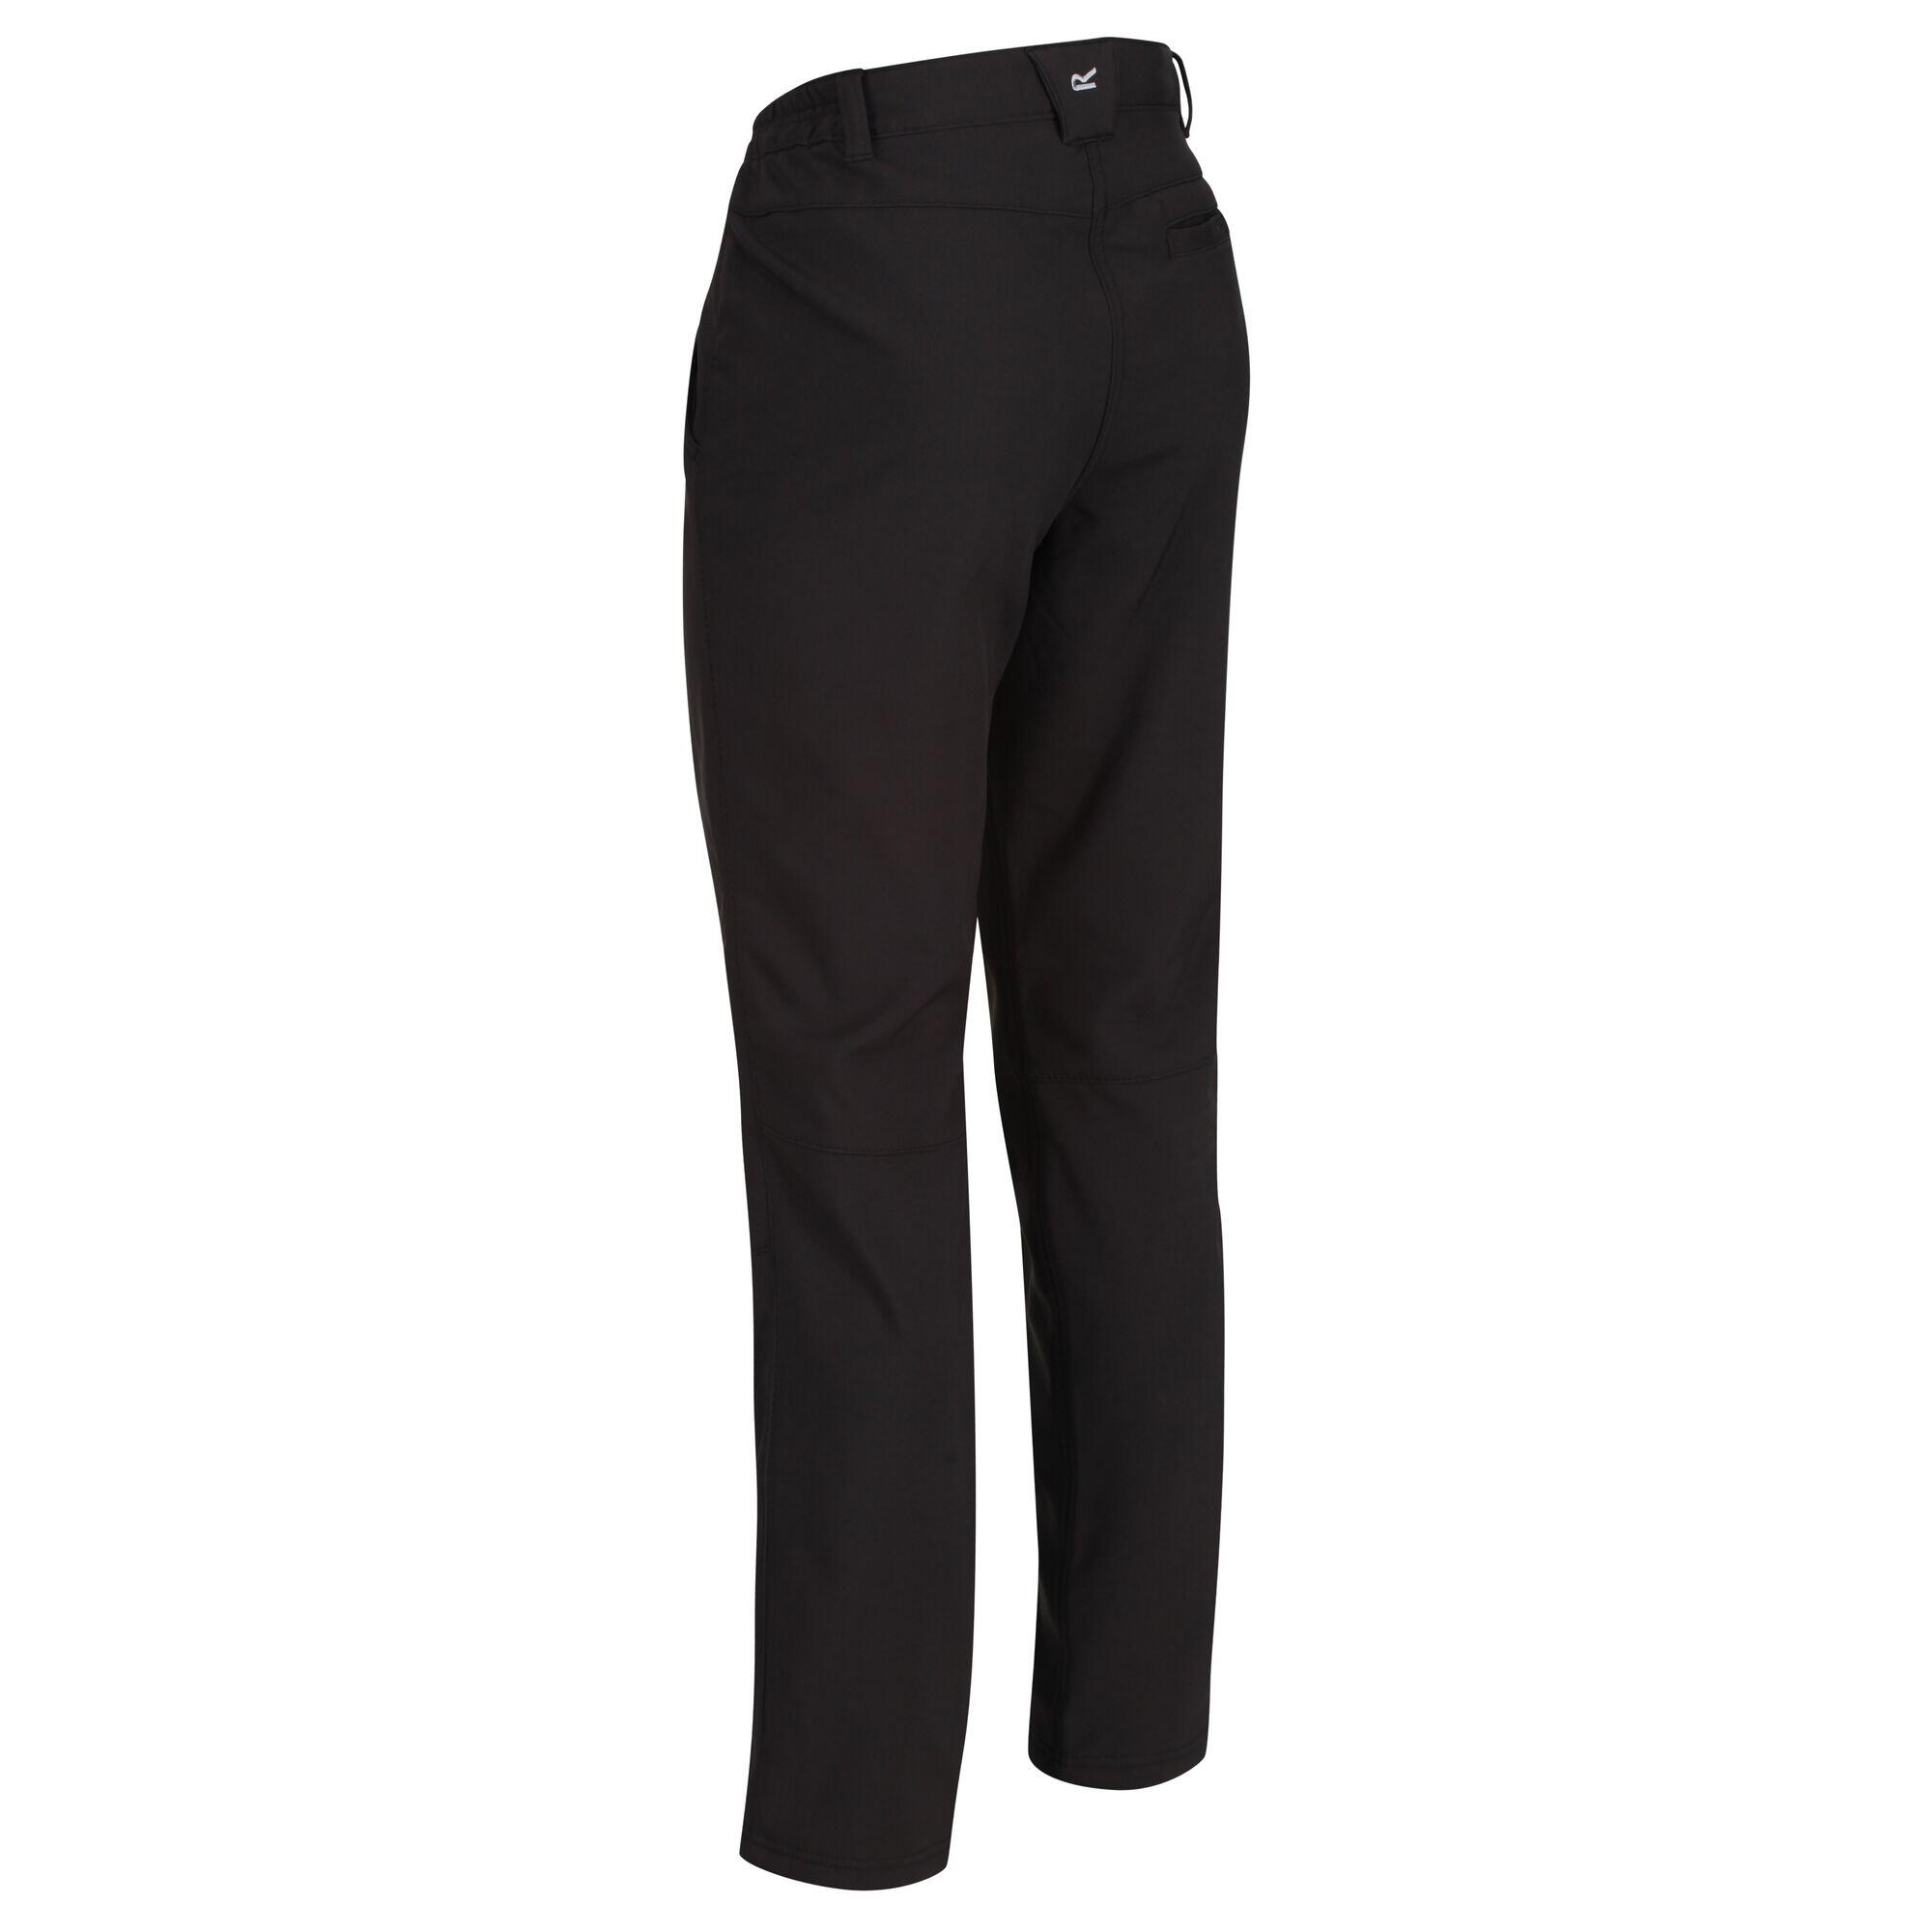 Fenton Women's Hiking Softshell Trousers - Black 4/7